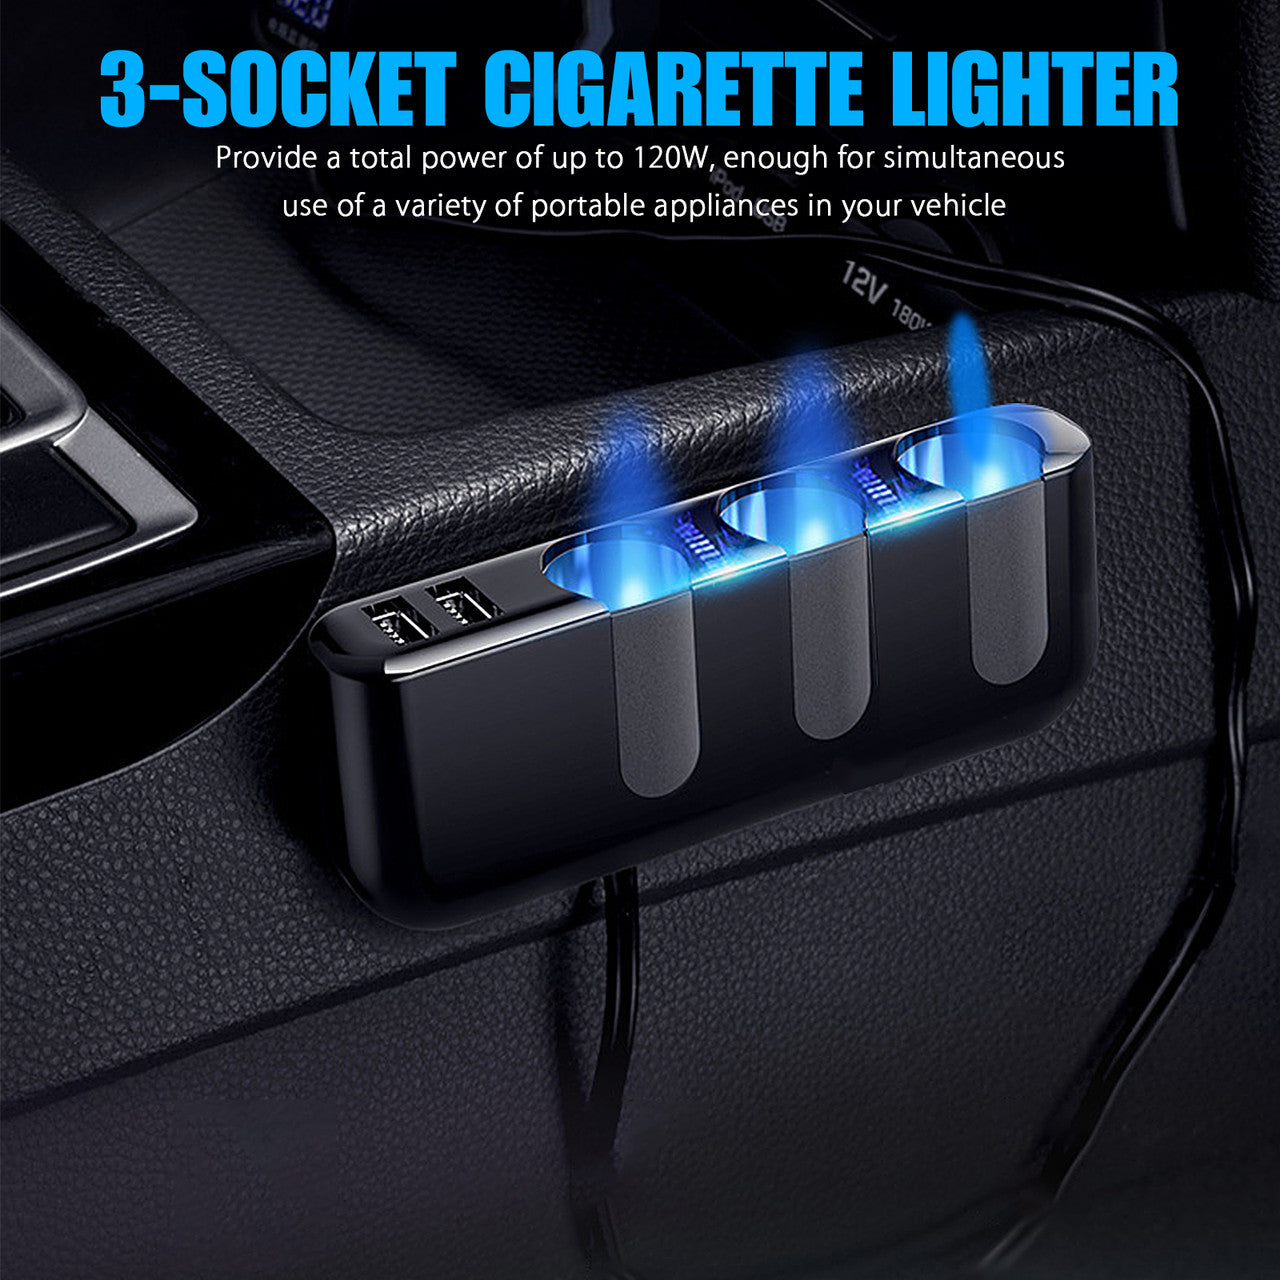 3 Way Car Cigarette Lighter Socket Splitter, Dual USB Car Charger Splitter Adapter 5V 3.5A, 120W Universal Cigarette Lighter Socket with LED Lights, Suitable for Phones GPS DVR Charging